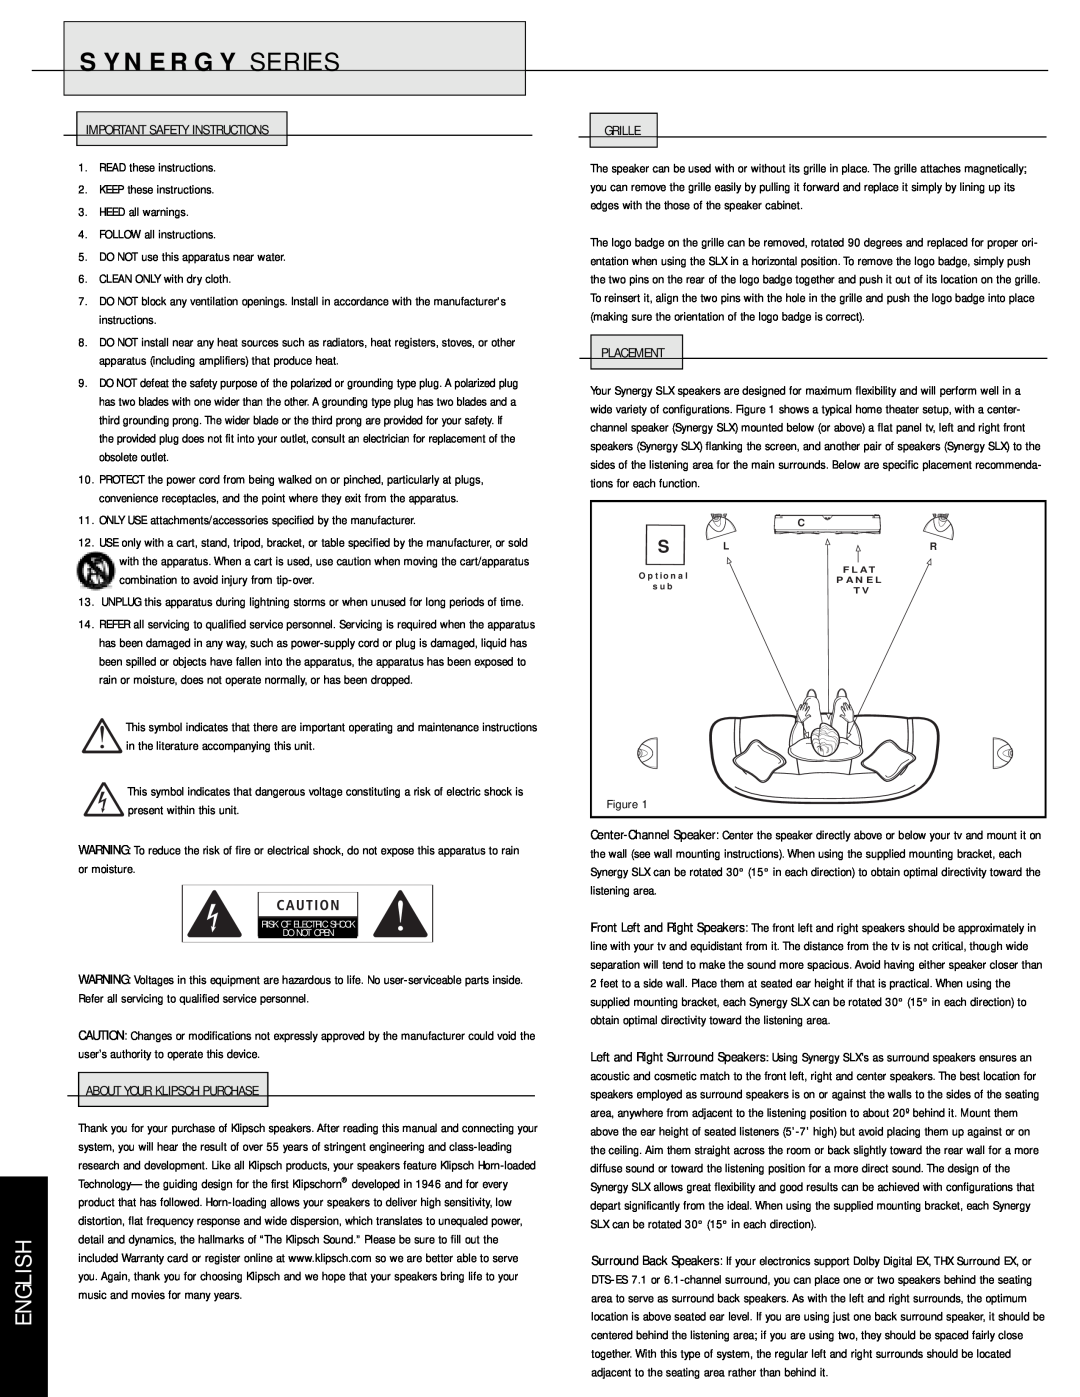 Klipsch Car Speaker manual Synergy Series, English 